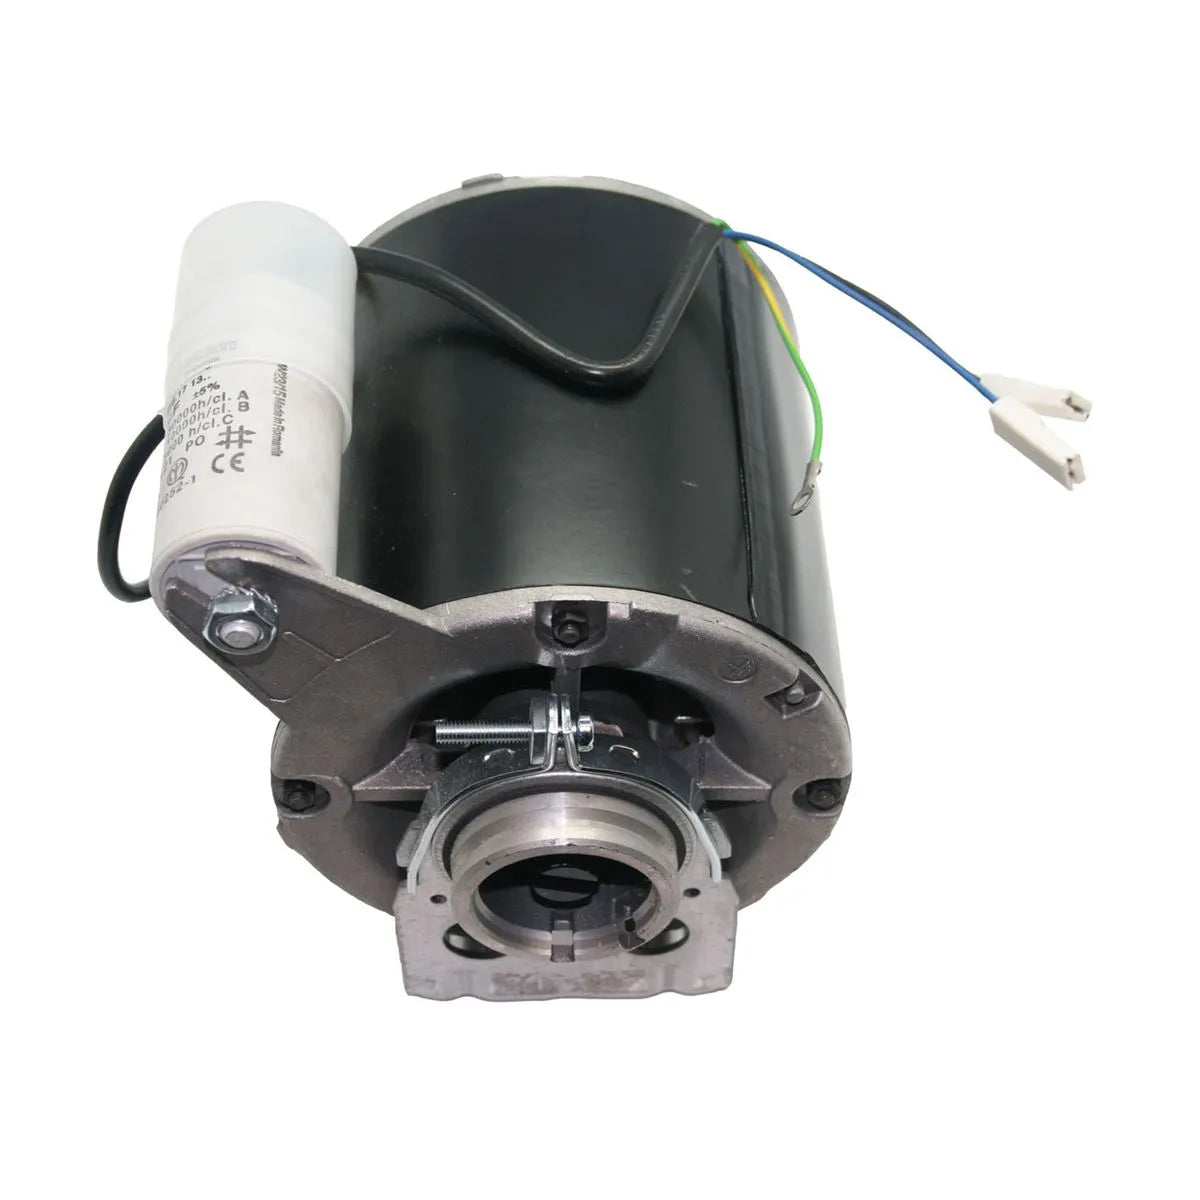 SISME Motor 180w/240v 1/4 HP CARB Pump